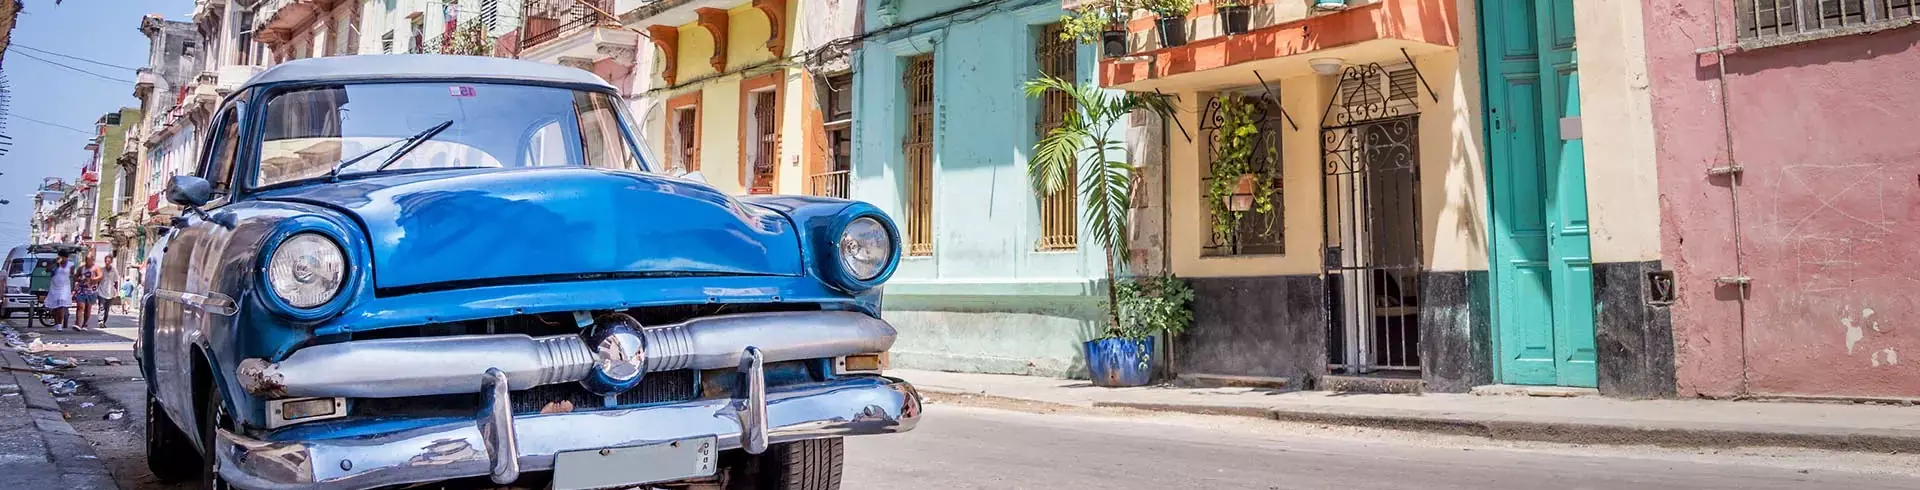 Kuba - Wyspa jak wulkan gorąca Premium